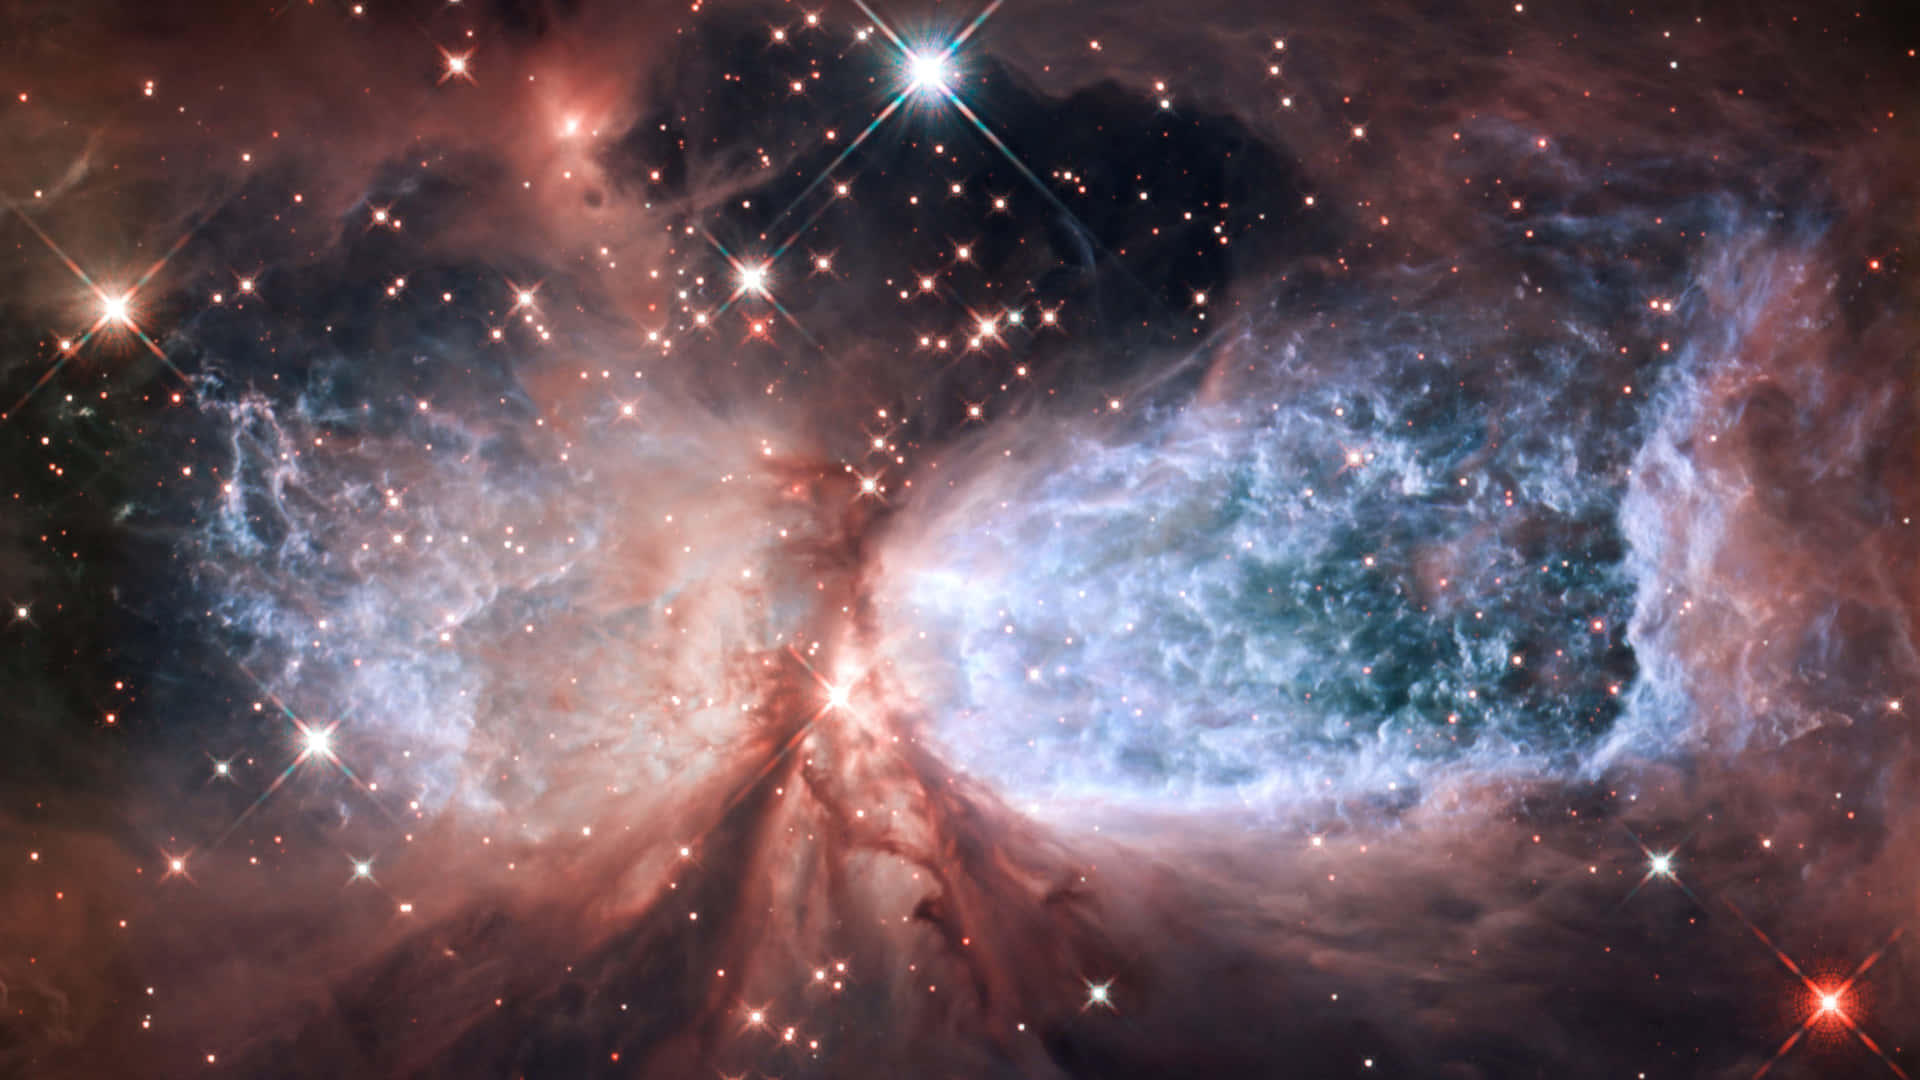 Glowing Nebula Captured By Hubble Telescope Wallpaper